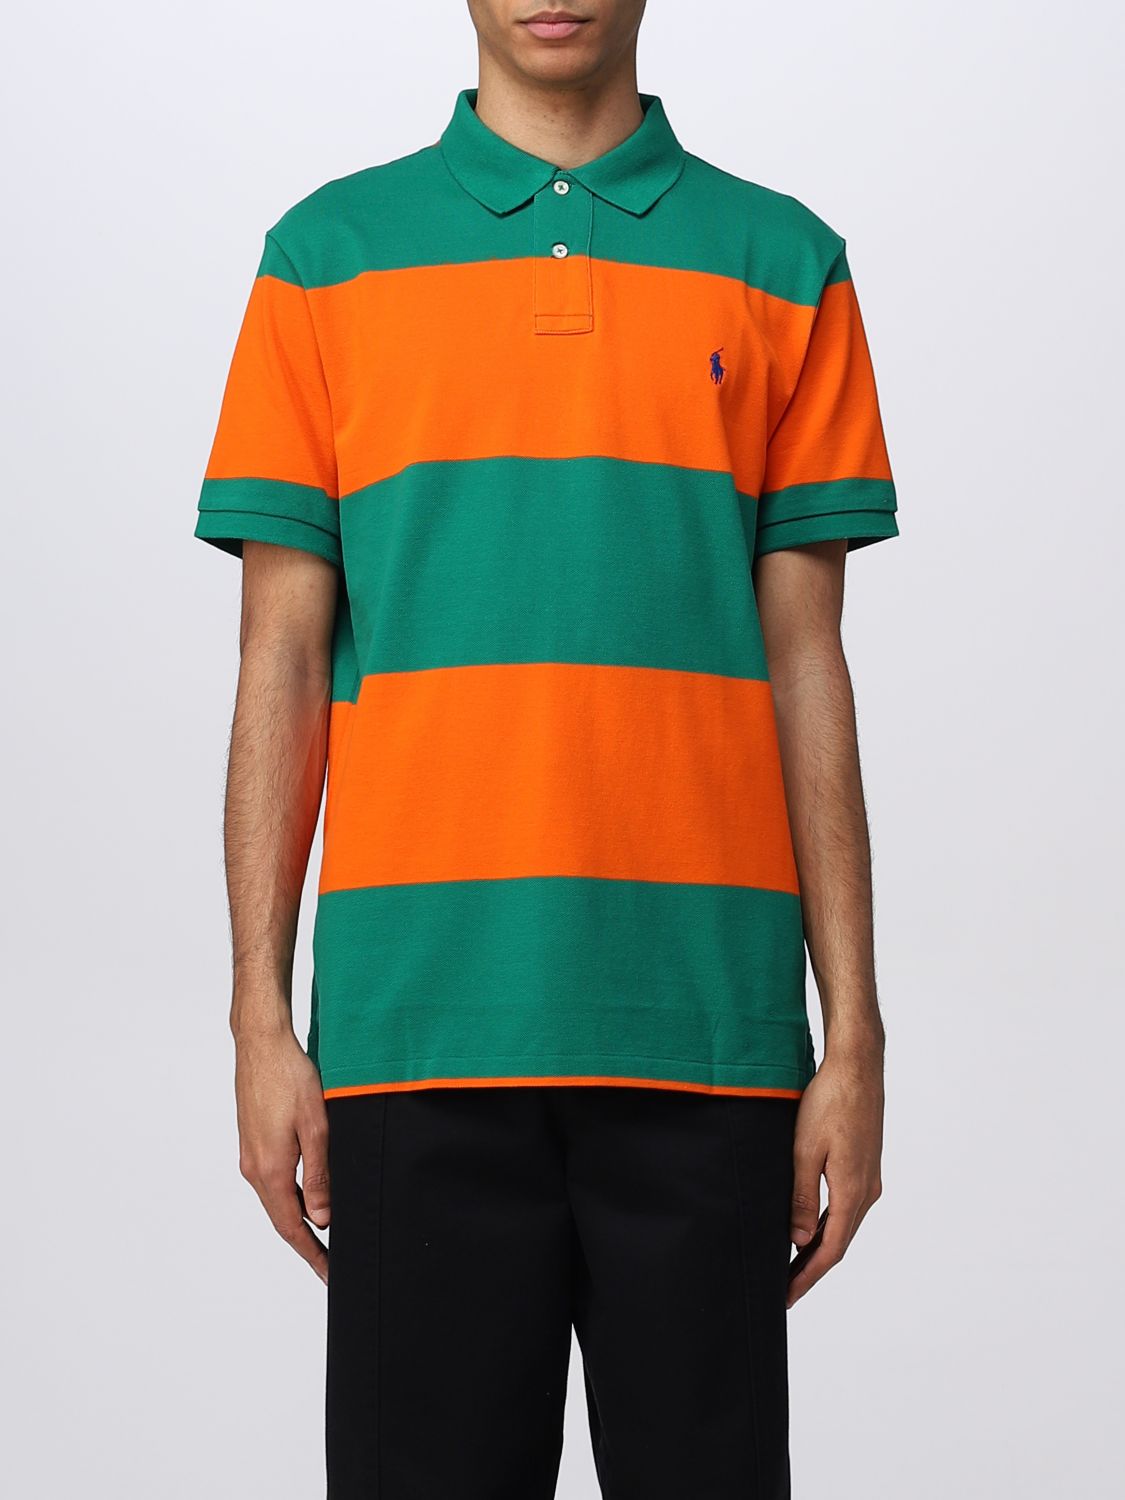 POLO RALPH LAUREN: polo shirt for man - Green | Polo Ralph Lauren polo shirt  710890052 online on 